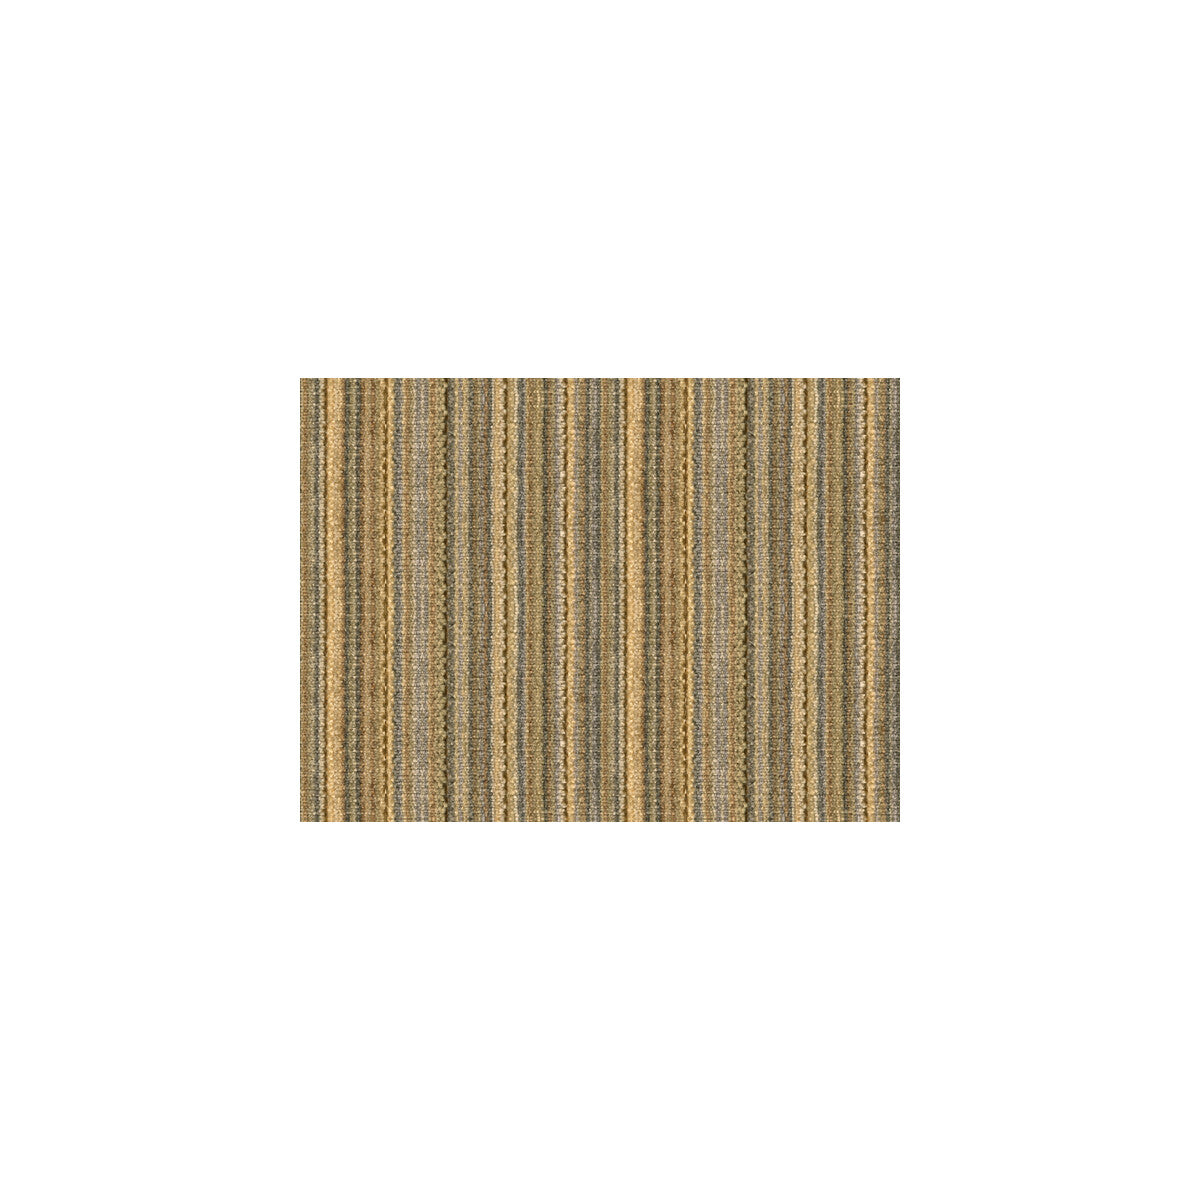 Hugo Velvet fabric in bisque color - pattern GWF-2586.611.0 - by Lee Jofa Modern